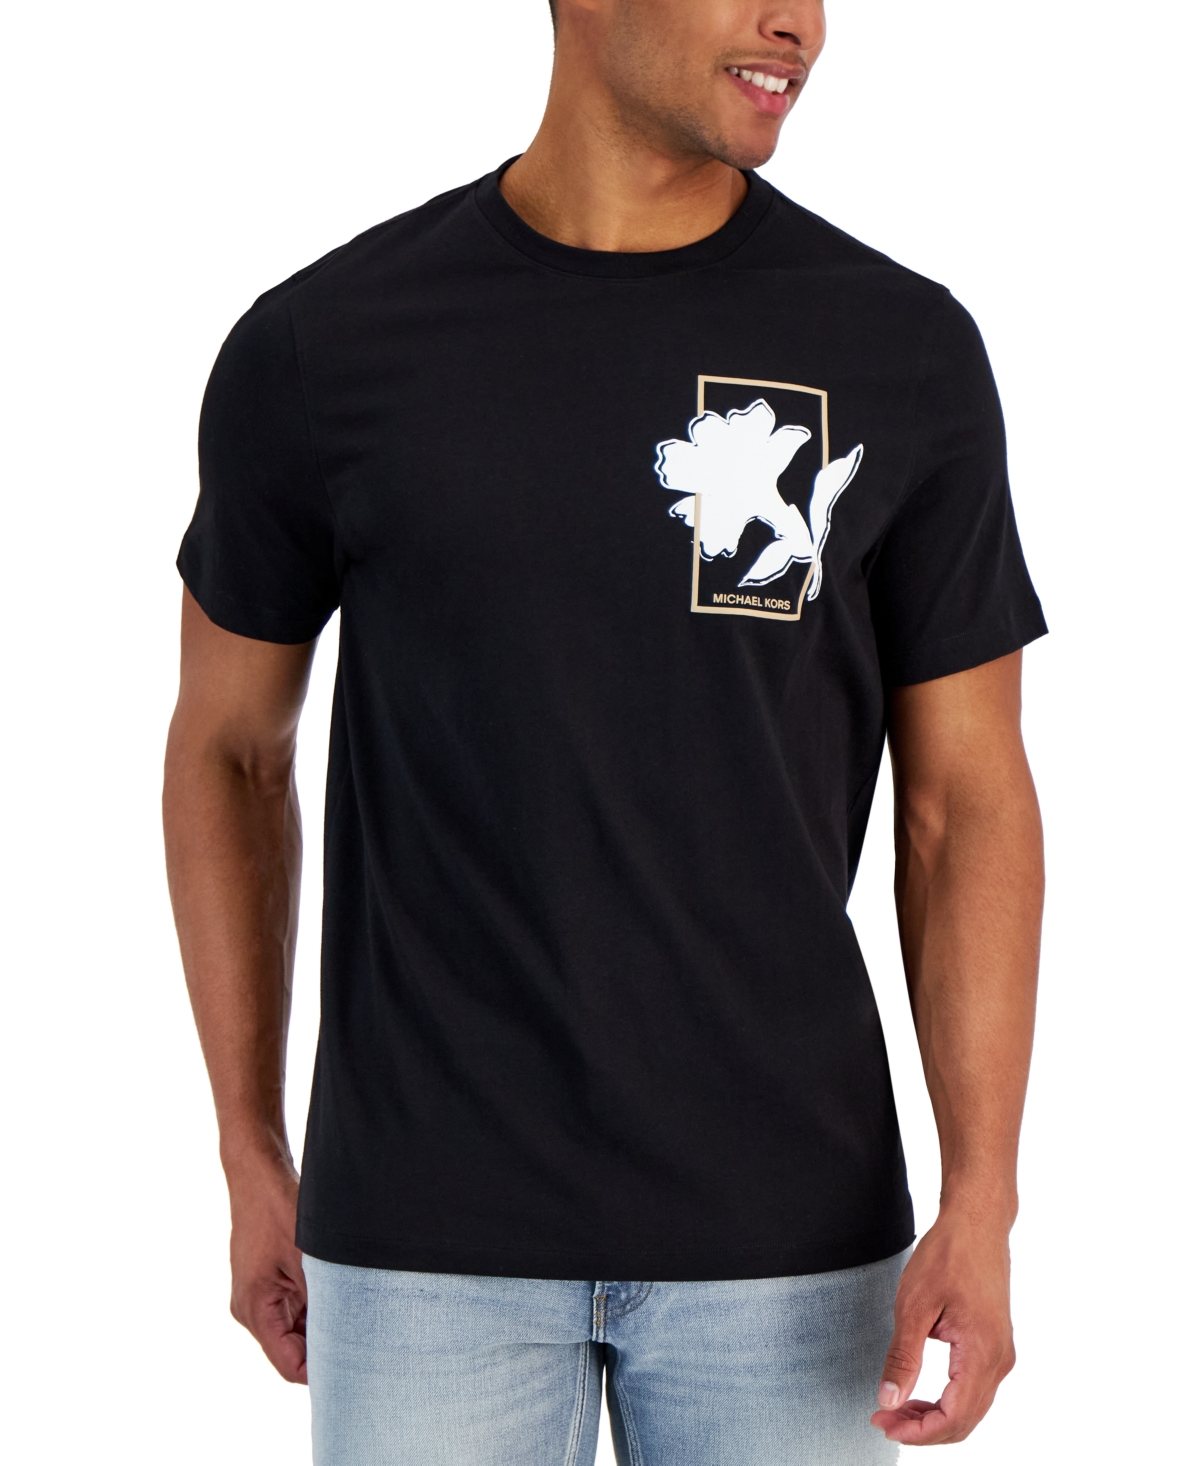 Men's Short Sleeve Floral Graphic T-Shirt - Black